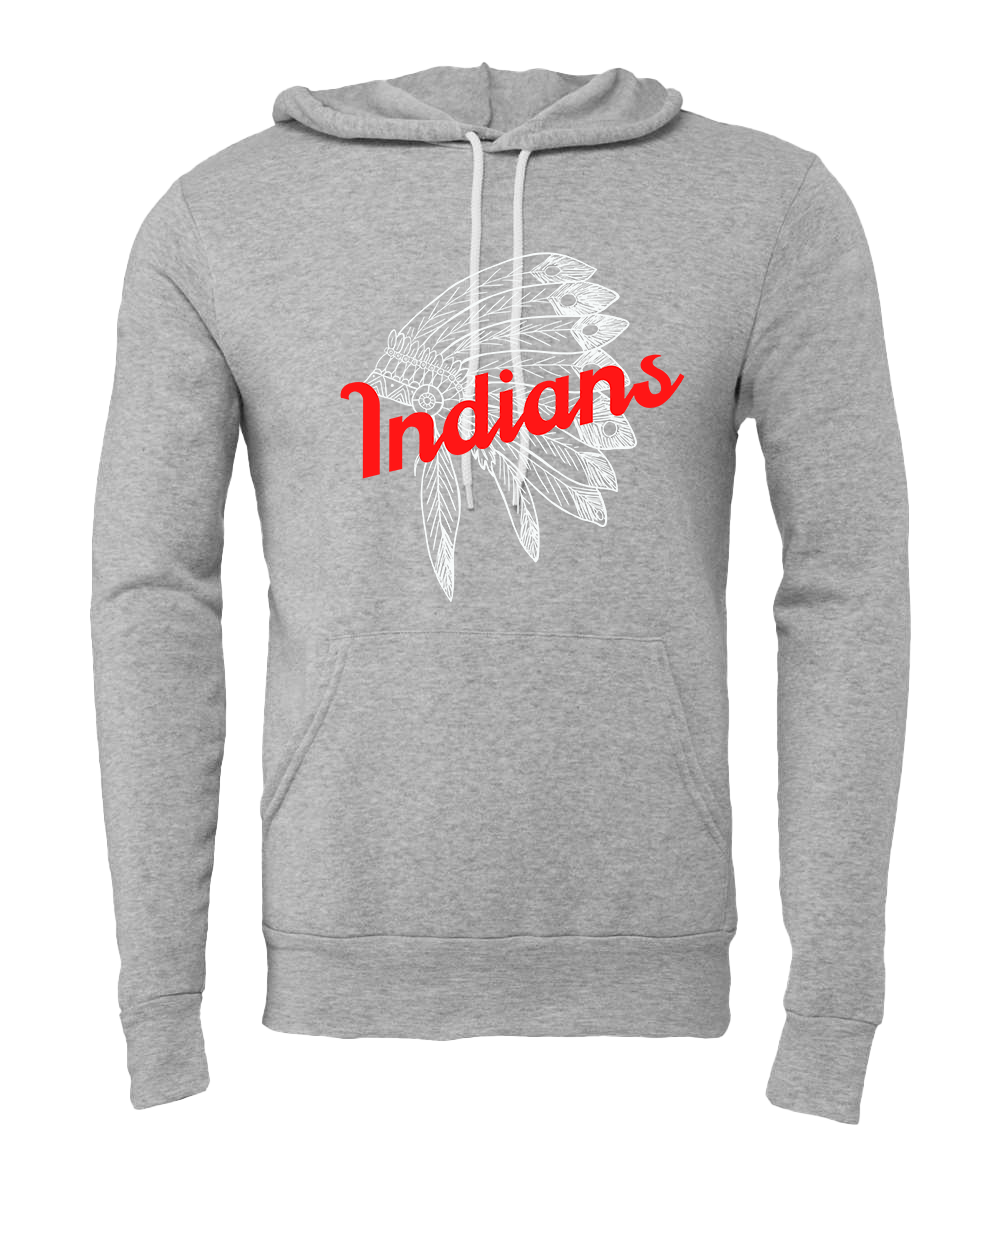 Ole Miss Indians Tribal Hood - Athletic Grey